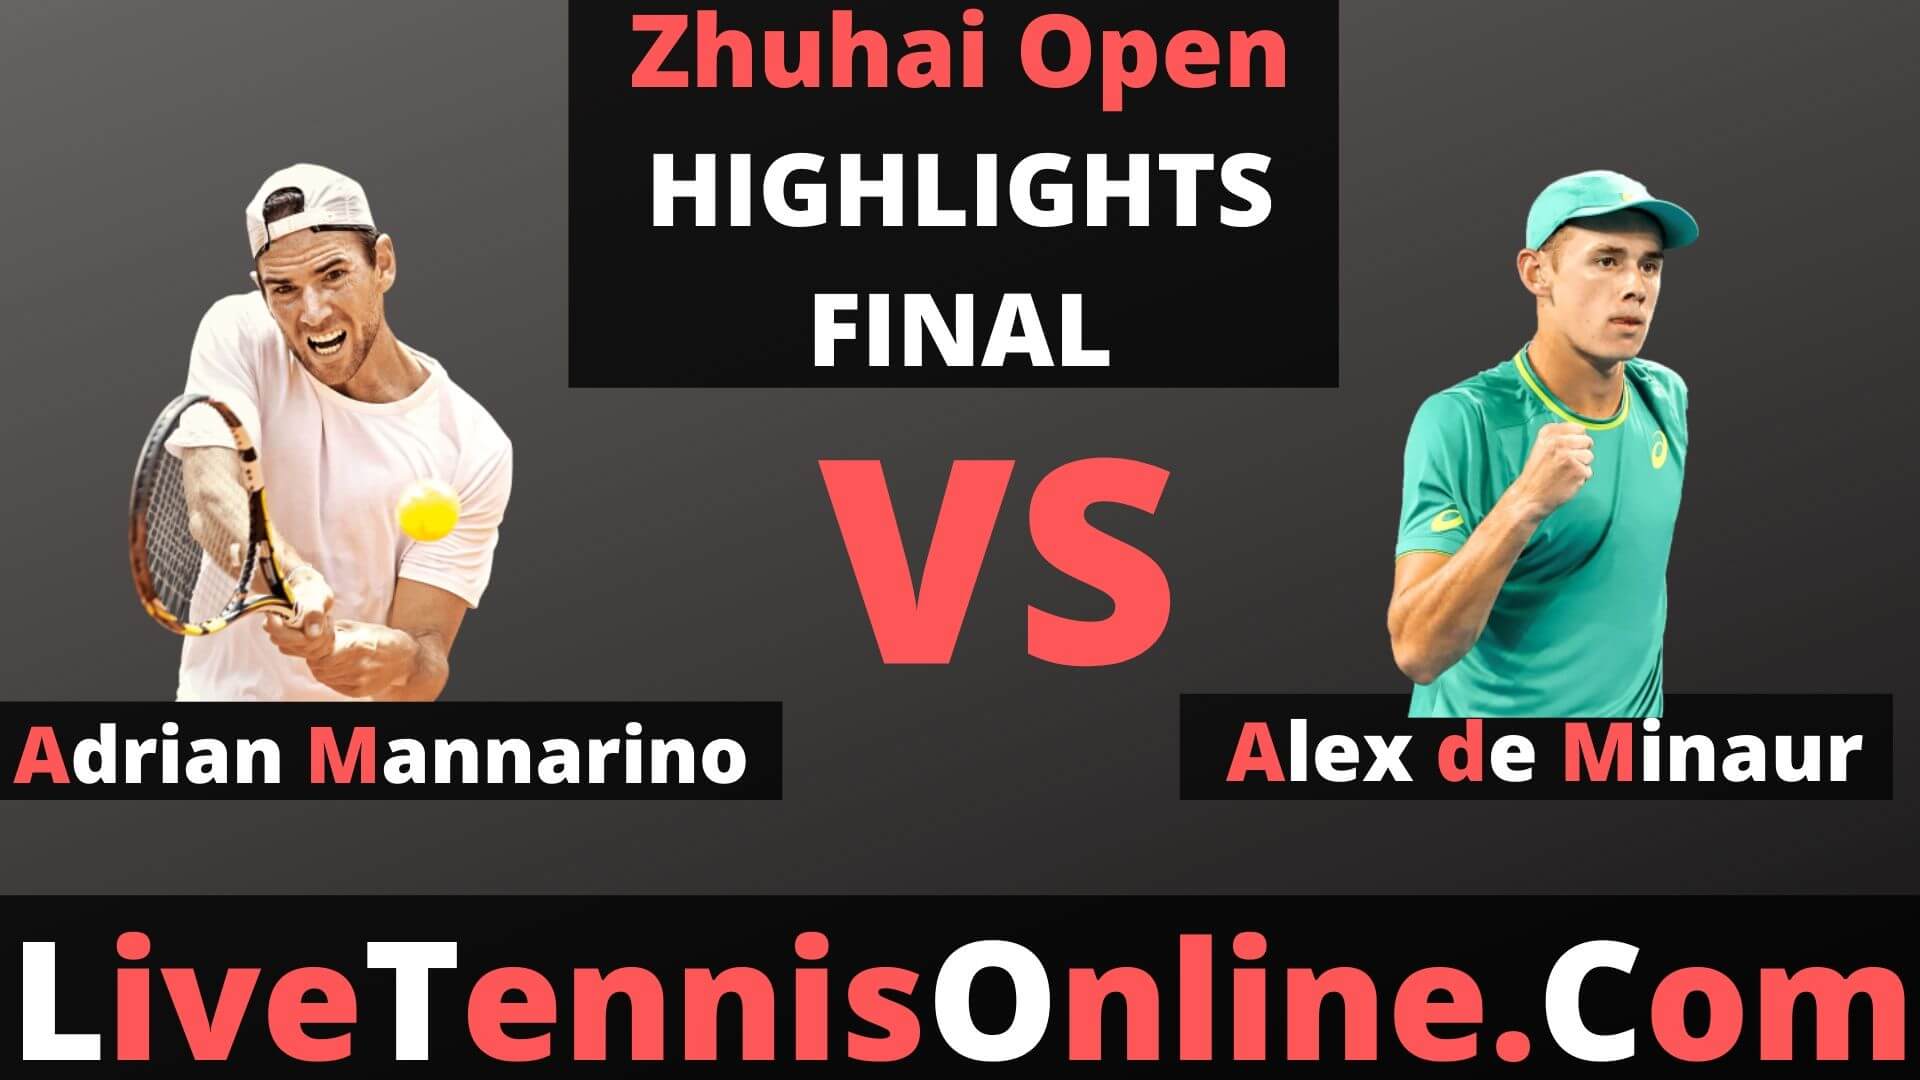 Adrian Mannarino Vs Alex de Minaur Highlights 2019 Zhuhai Open Final